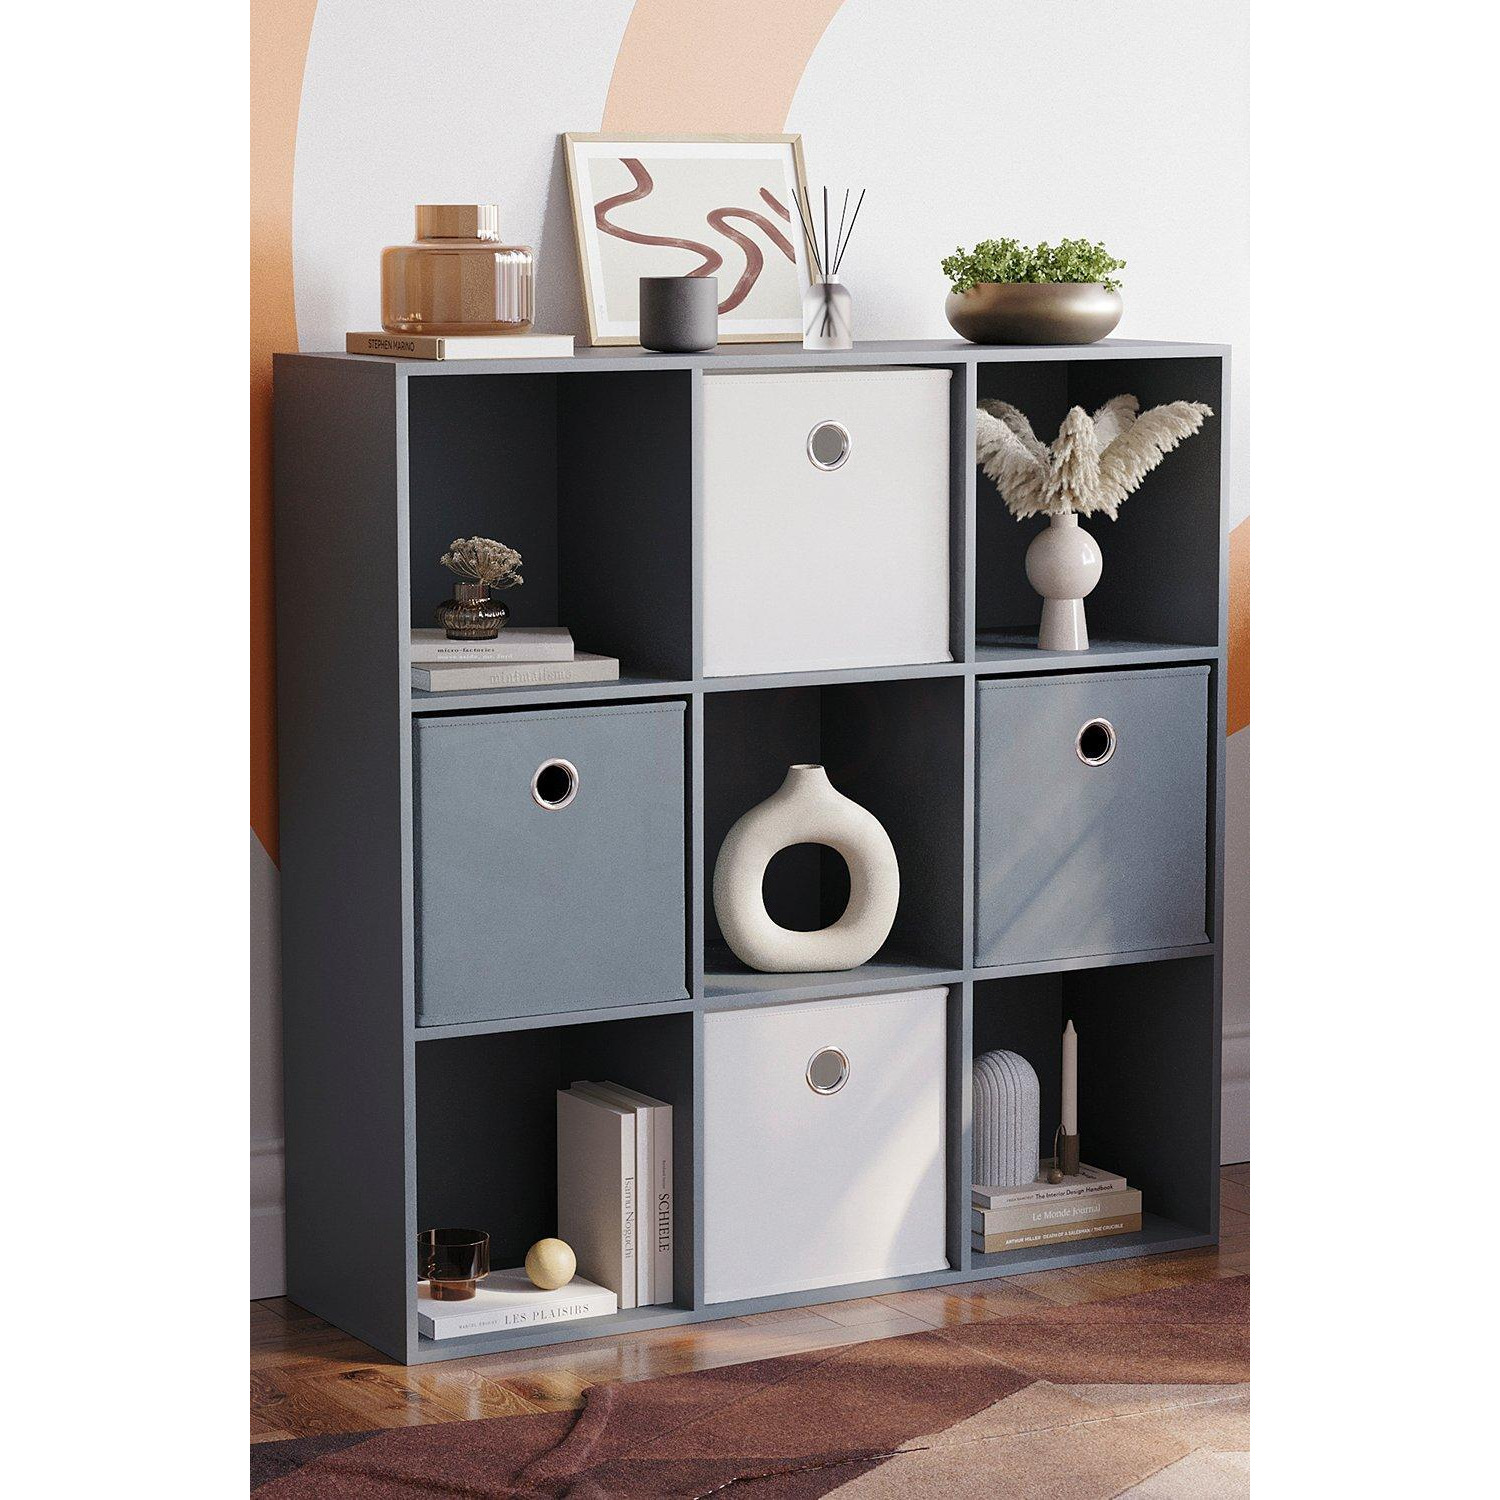 Vida Designs Durham 3x3 Cube Bookcase Storage Unit 965 x 965 x 290 mm - image 1